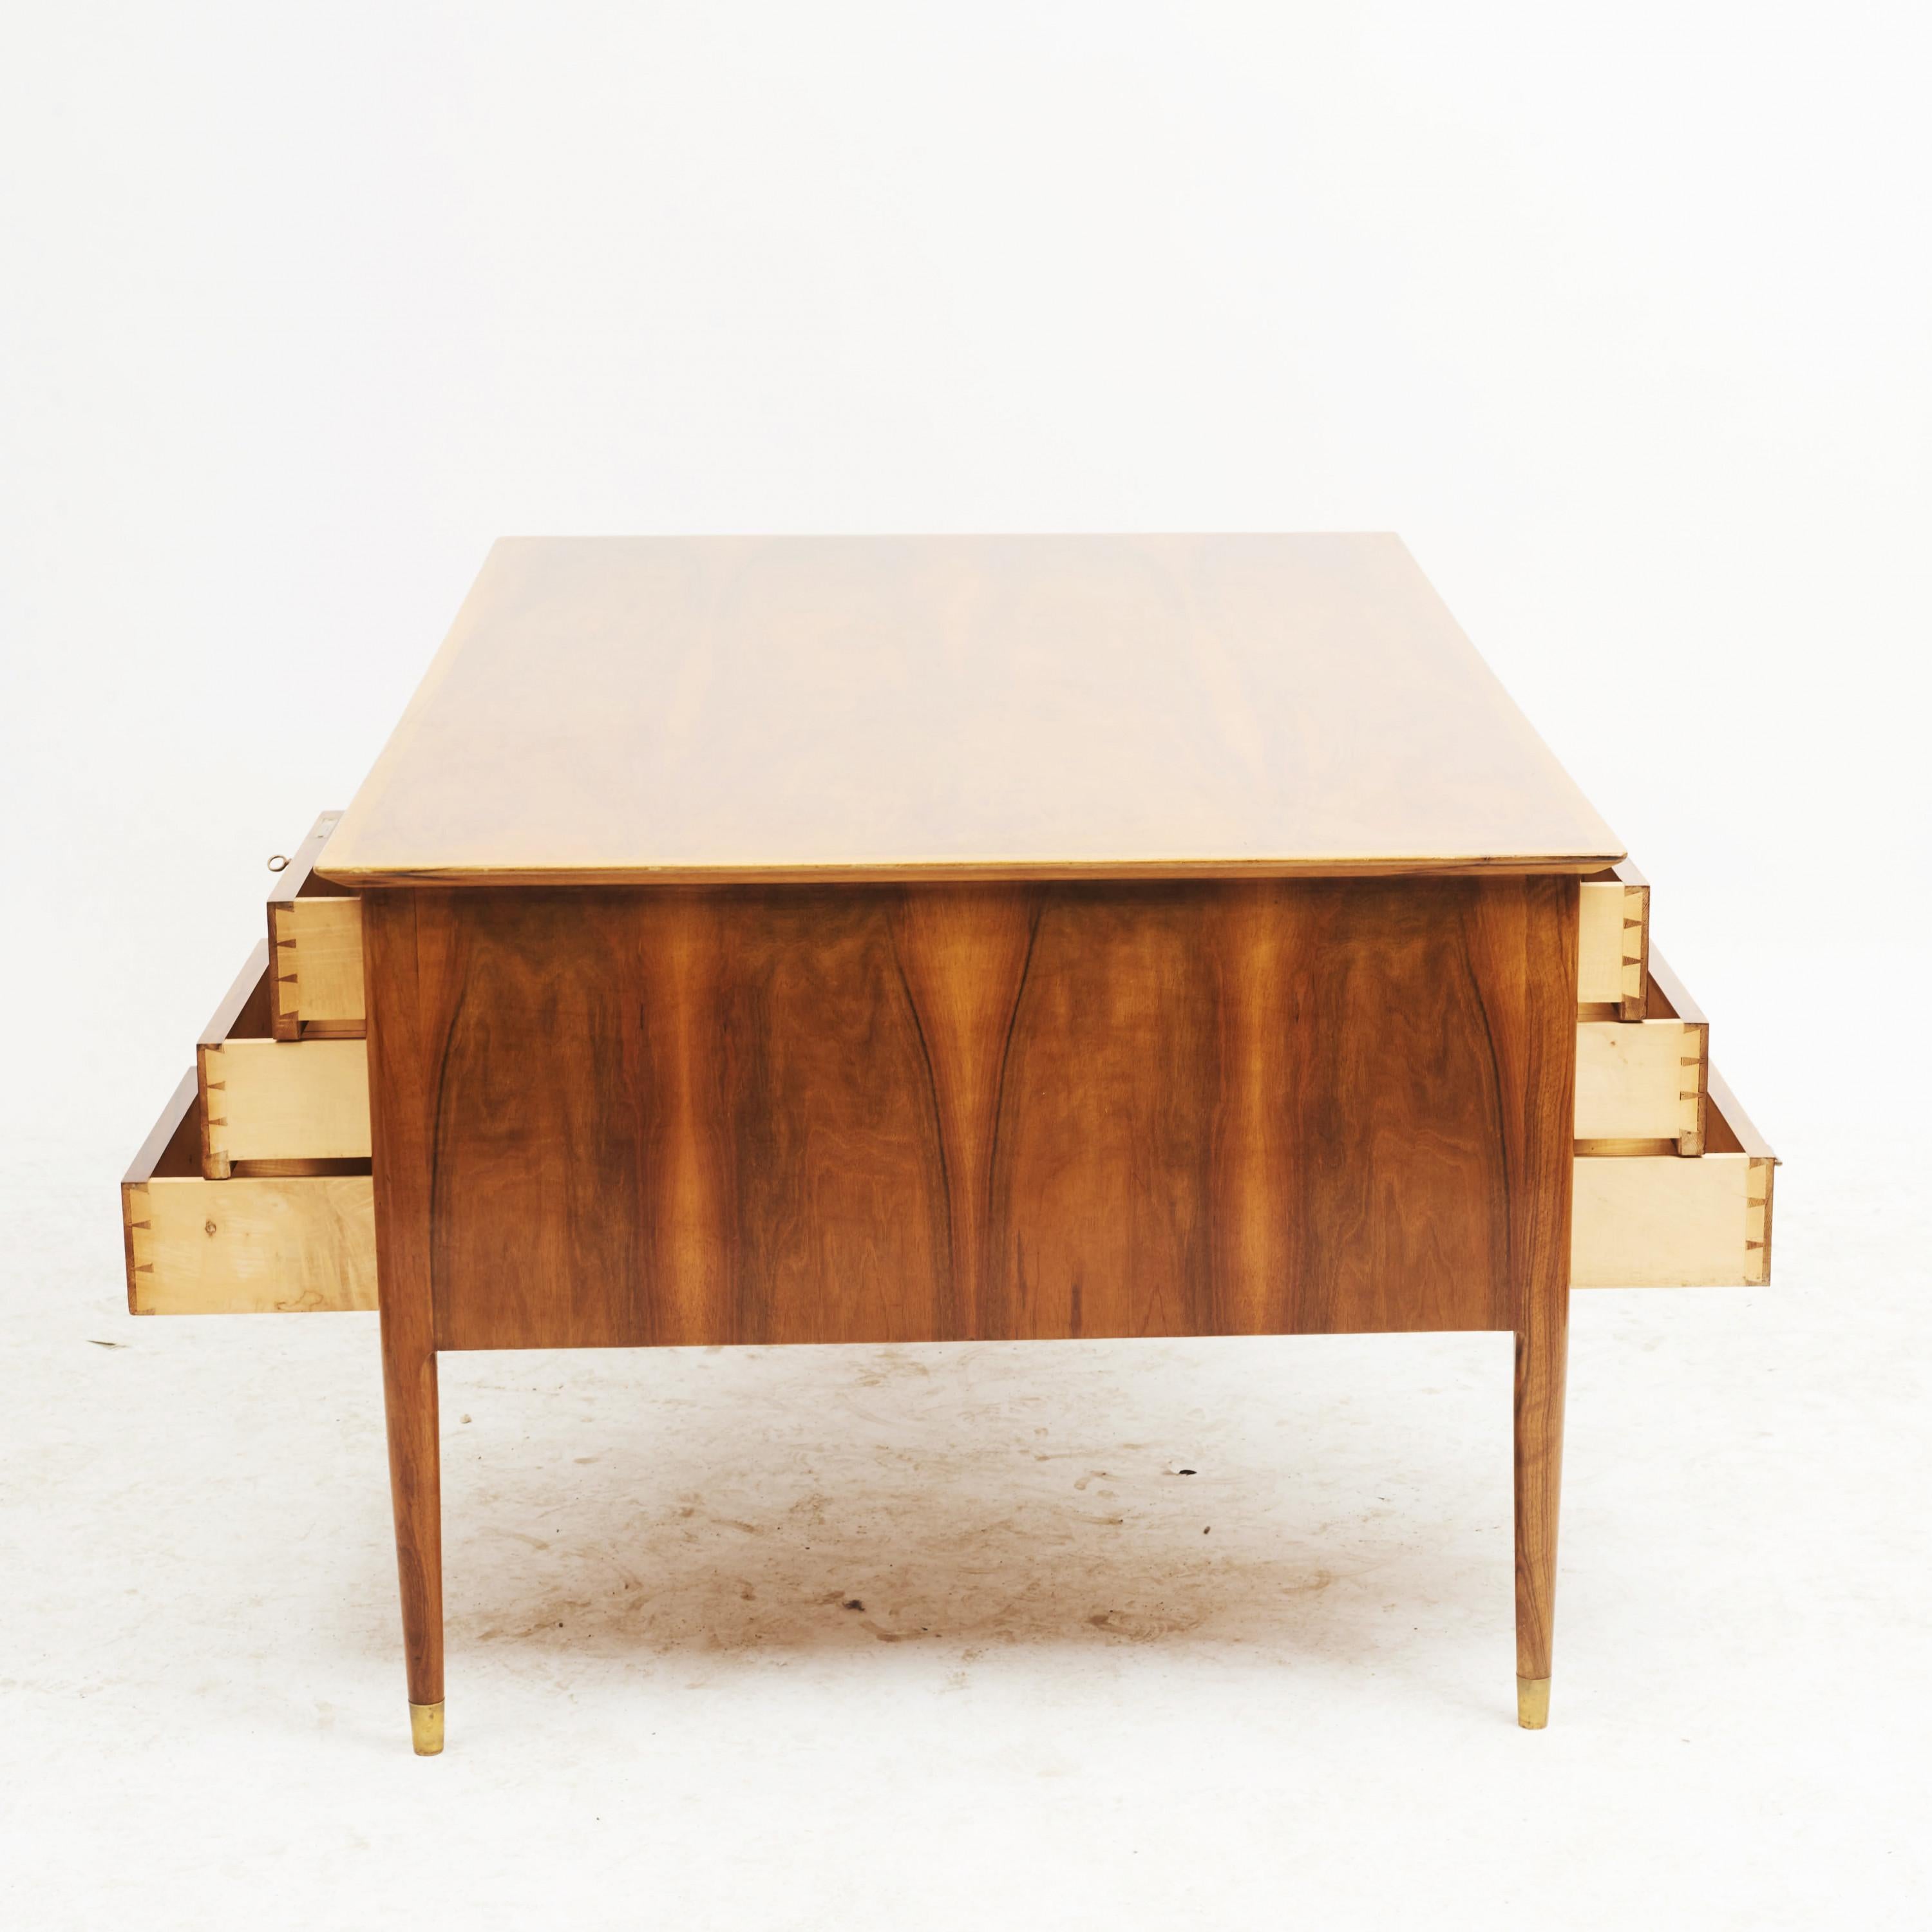 Ole Wanscher, 1903-1985. Desk / partner's desk in walnut veneer. Six drawers on each side with original brass hardware. Legs with brass feet.
Denmark, circa 1960.

Measurement (cm): H 74 / 67.5, B 165, D 100.
     